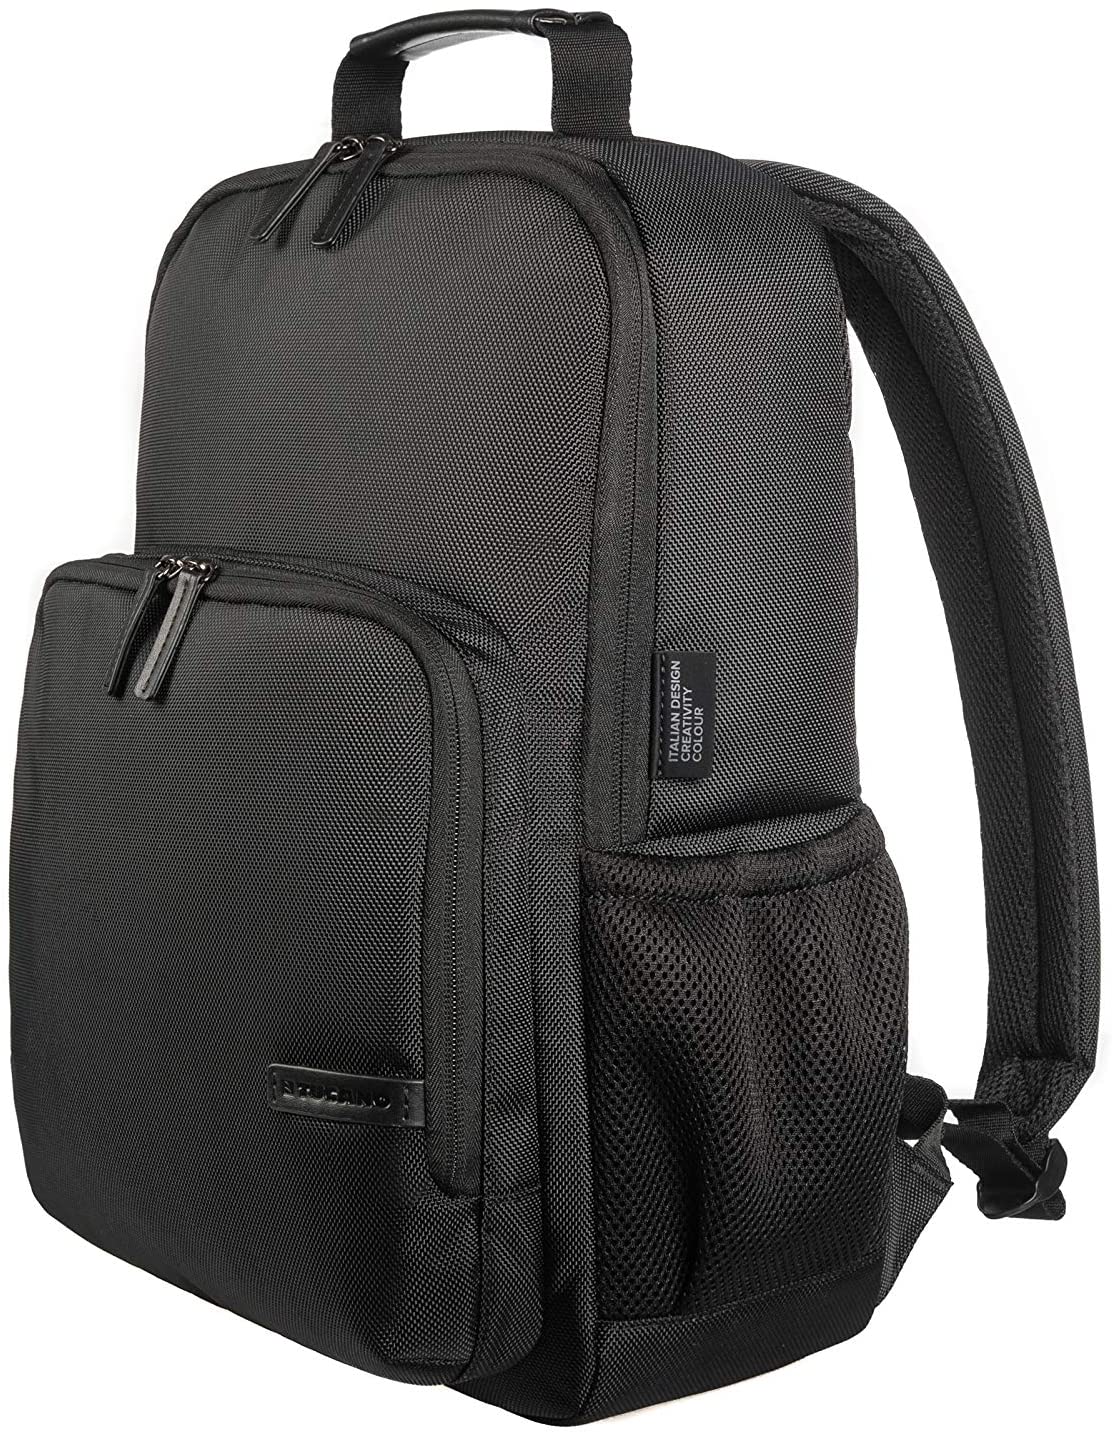 Tucano – Free & Busy Backpack 15.6″ Black | Surovi Enterprise Ltd.